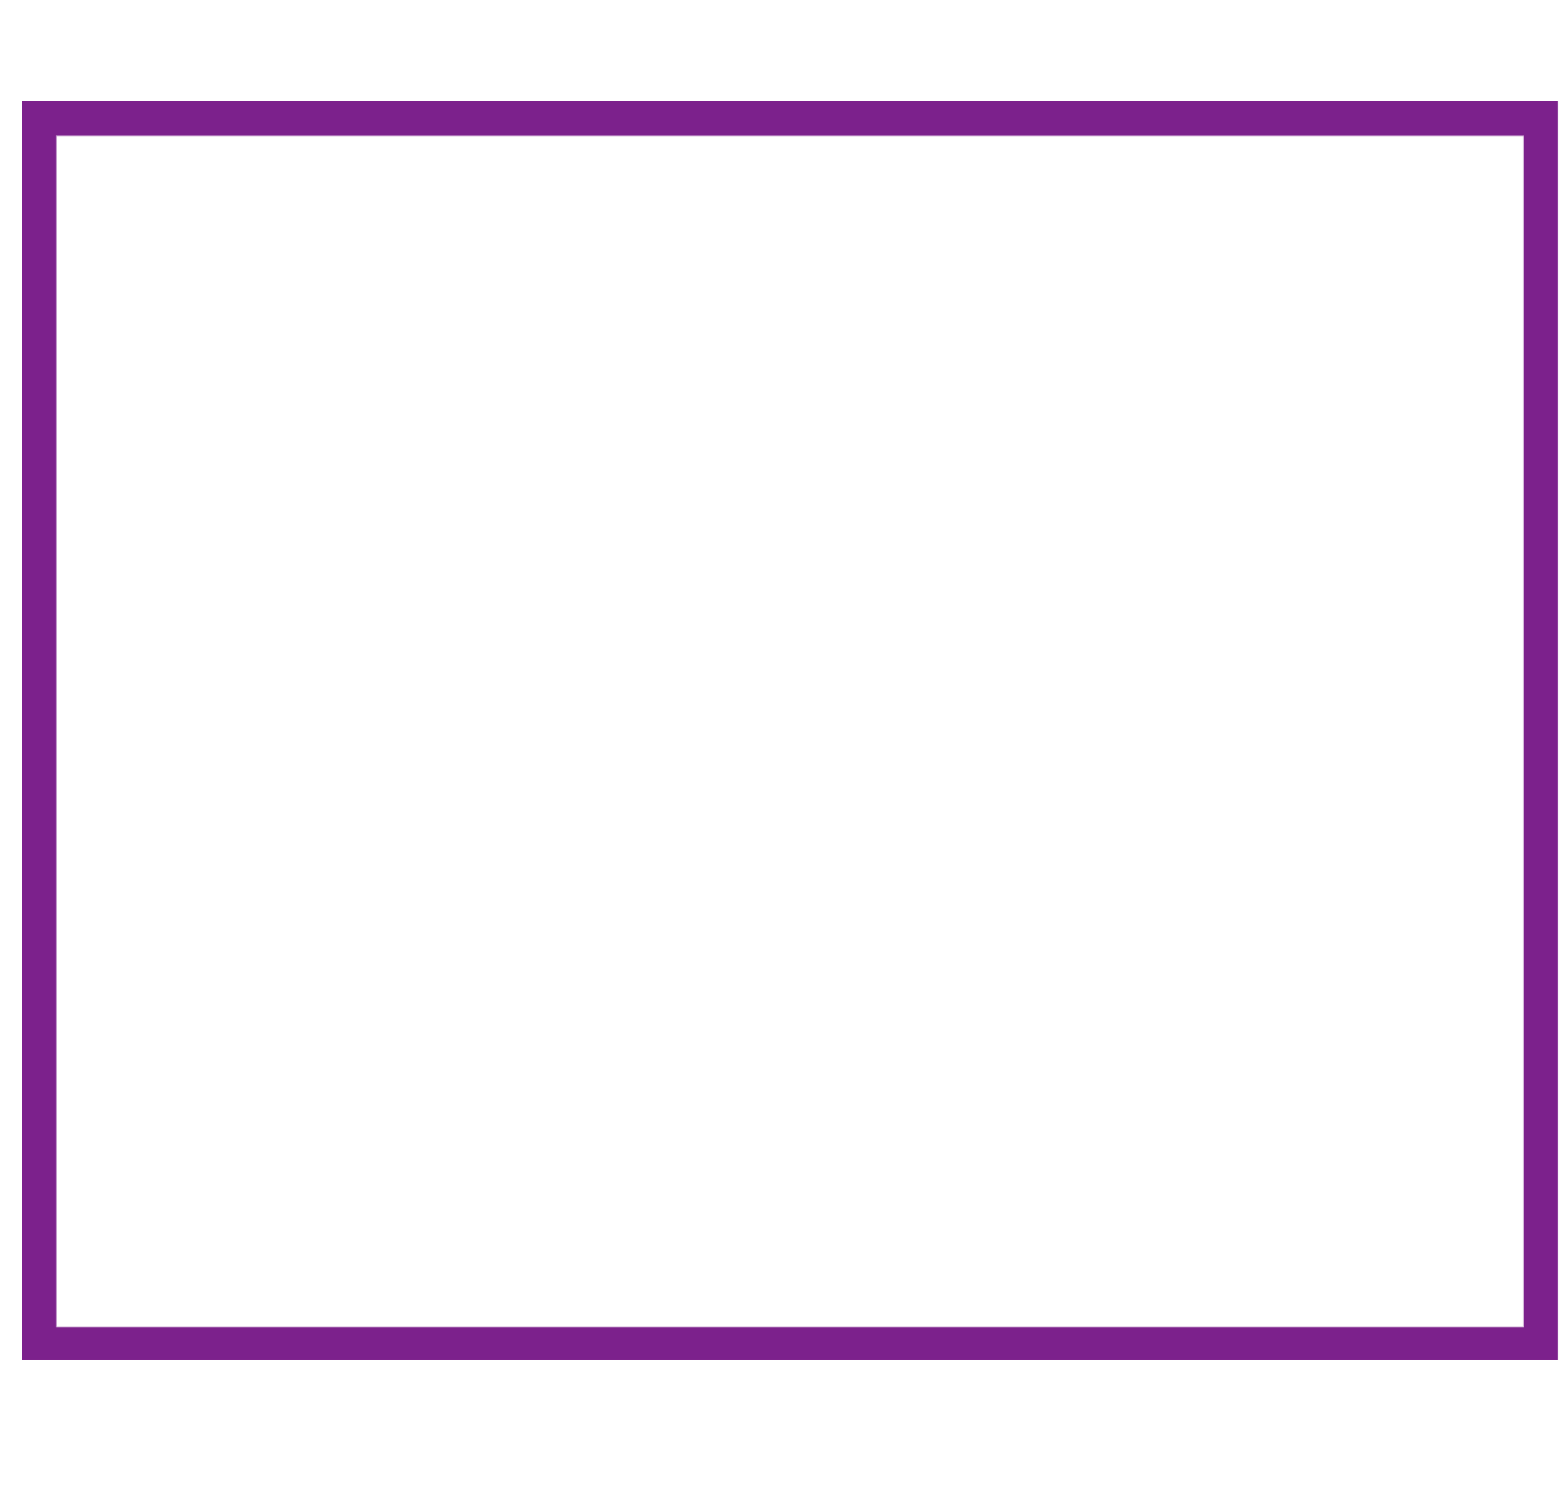 CYFCare